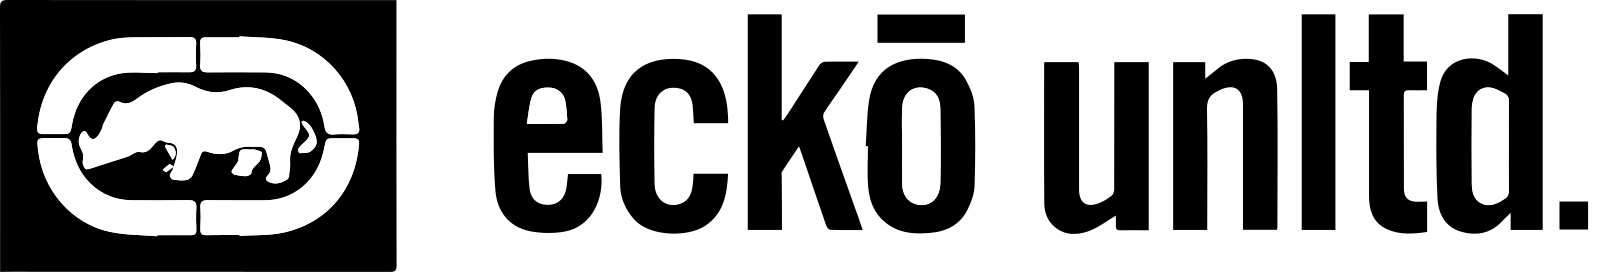 ecko unltd logo 20 - ecko Logo